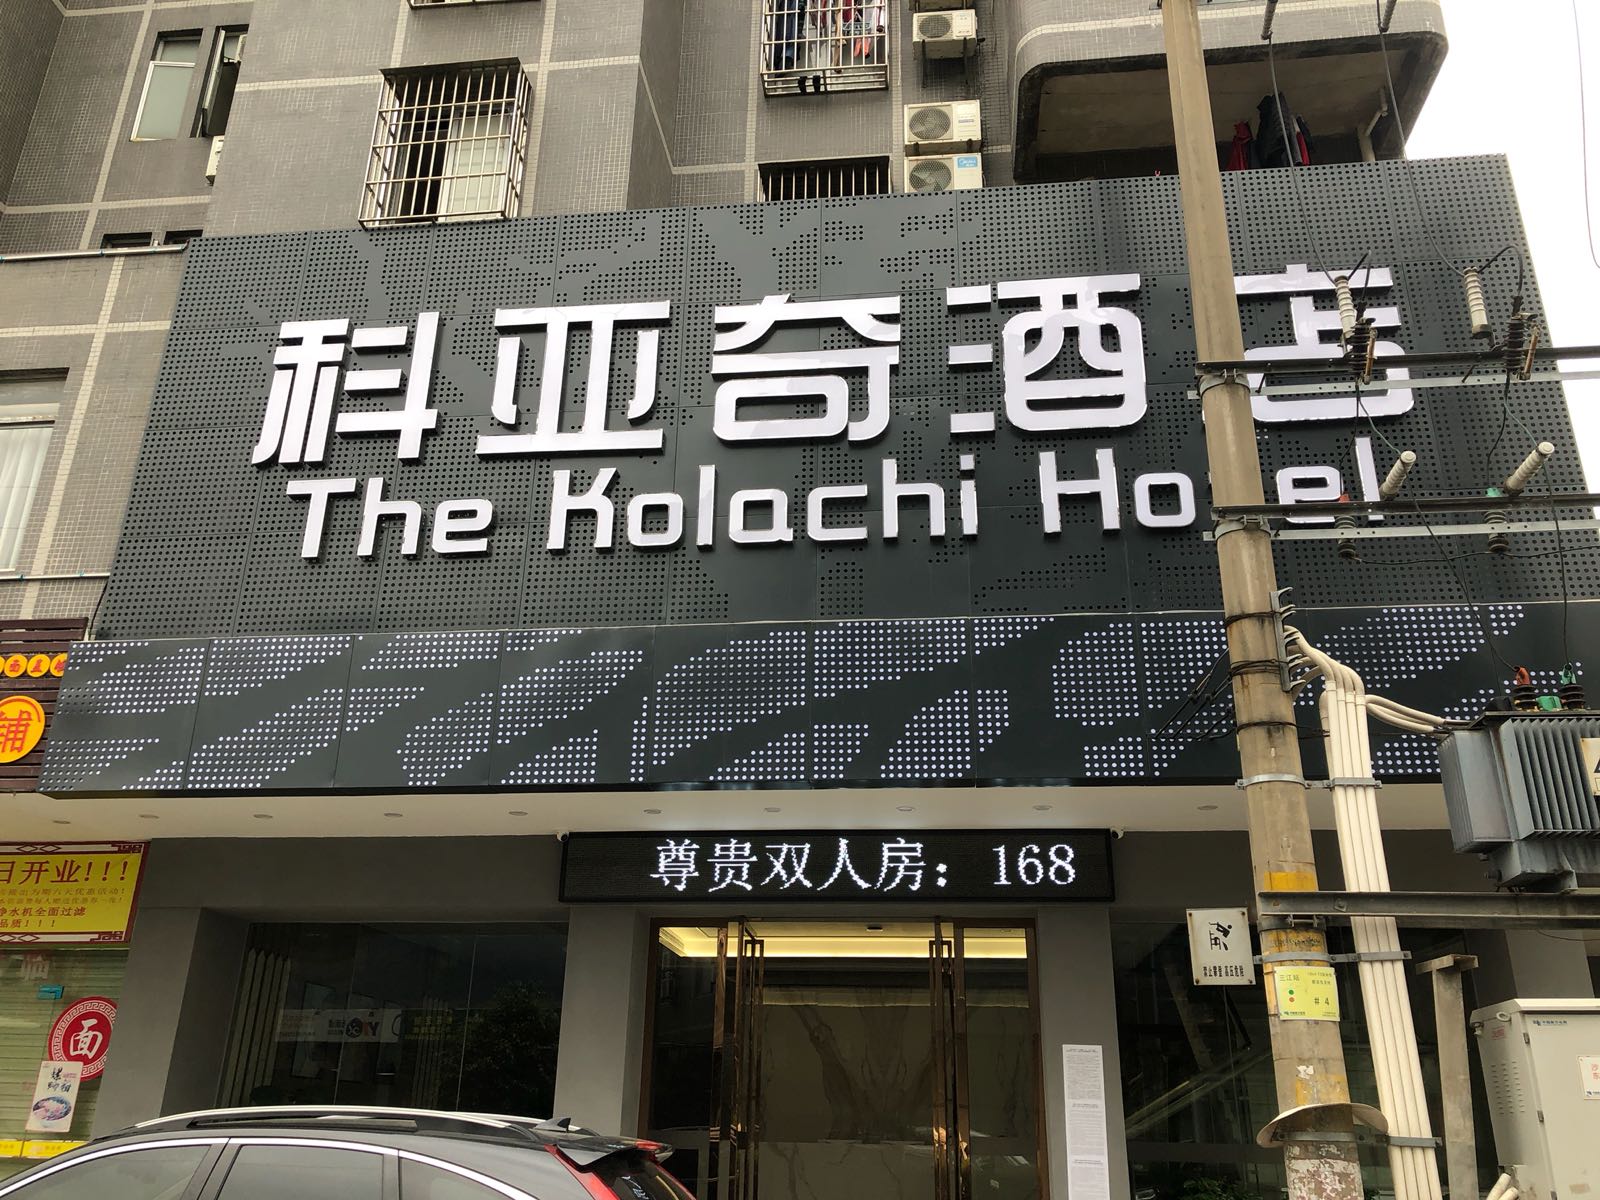 The kolqchi hotel